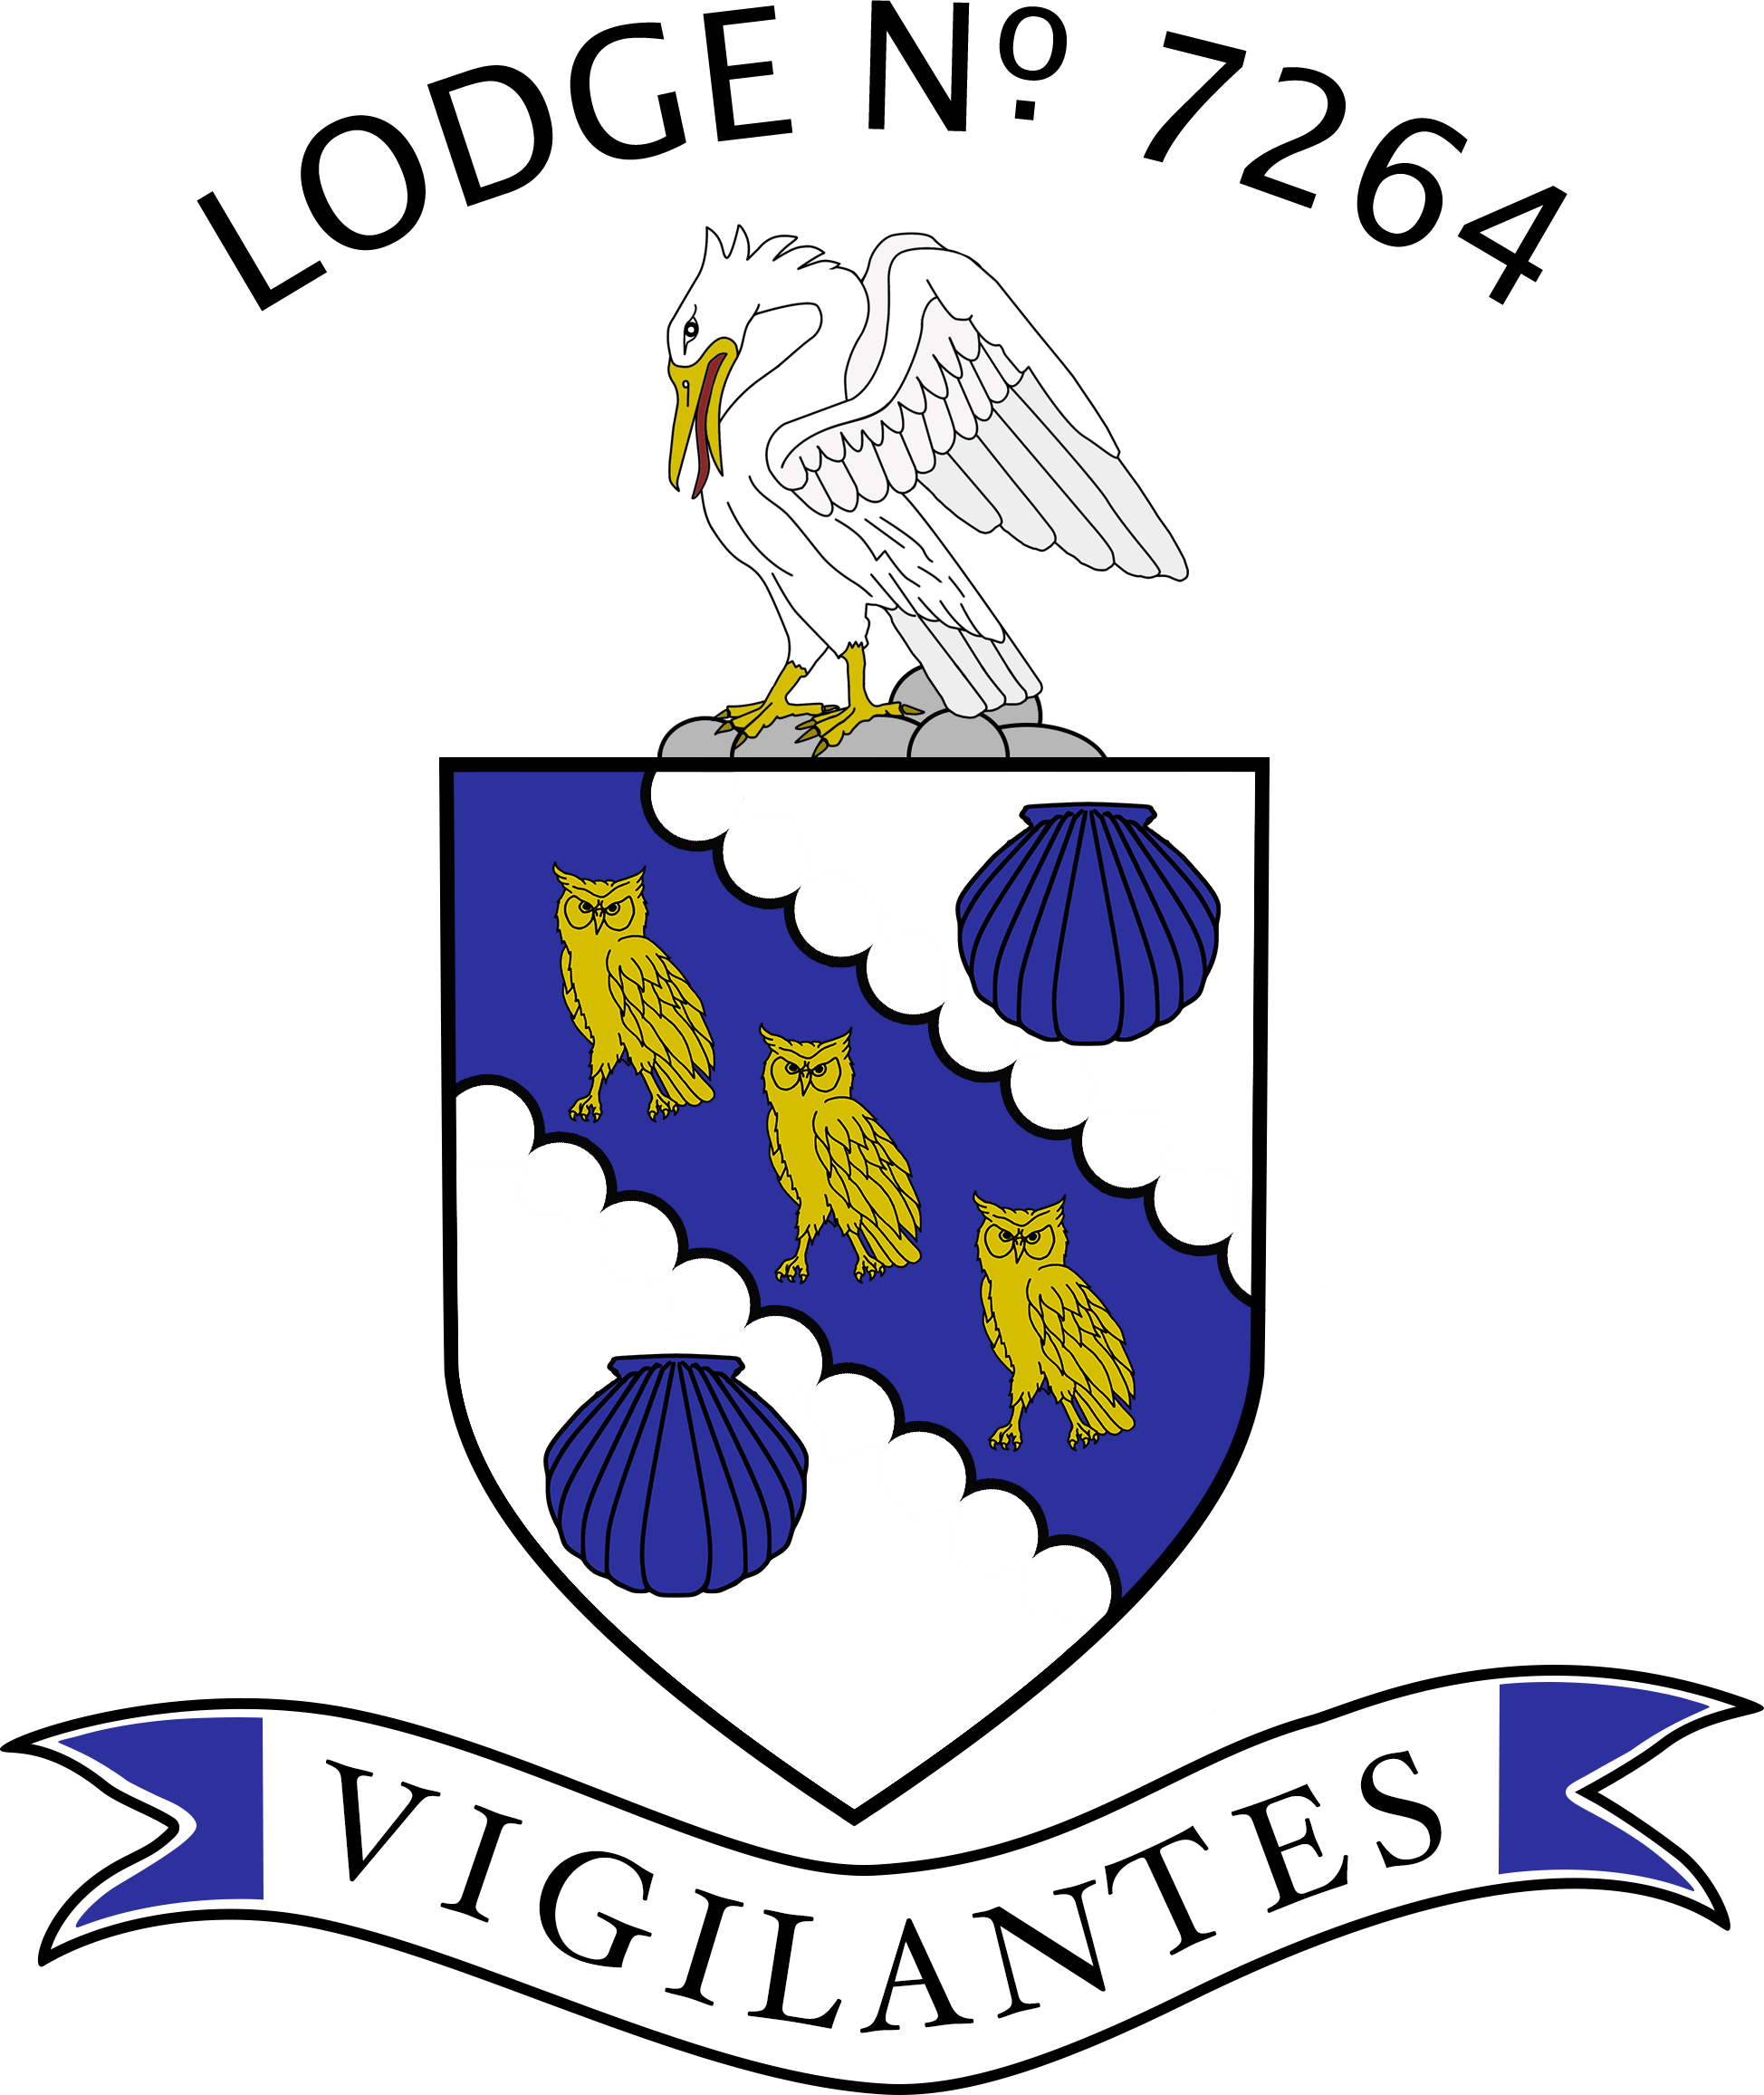 Vigilantes Lodge Logo, small